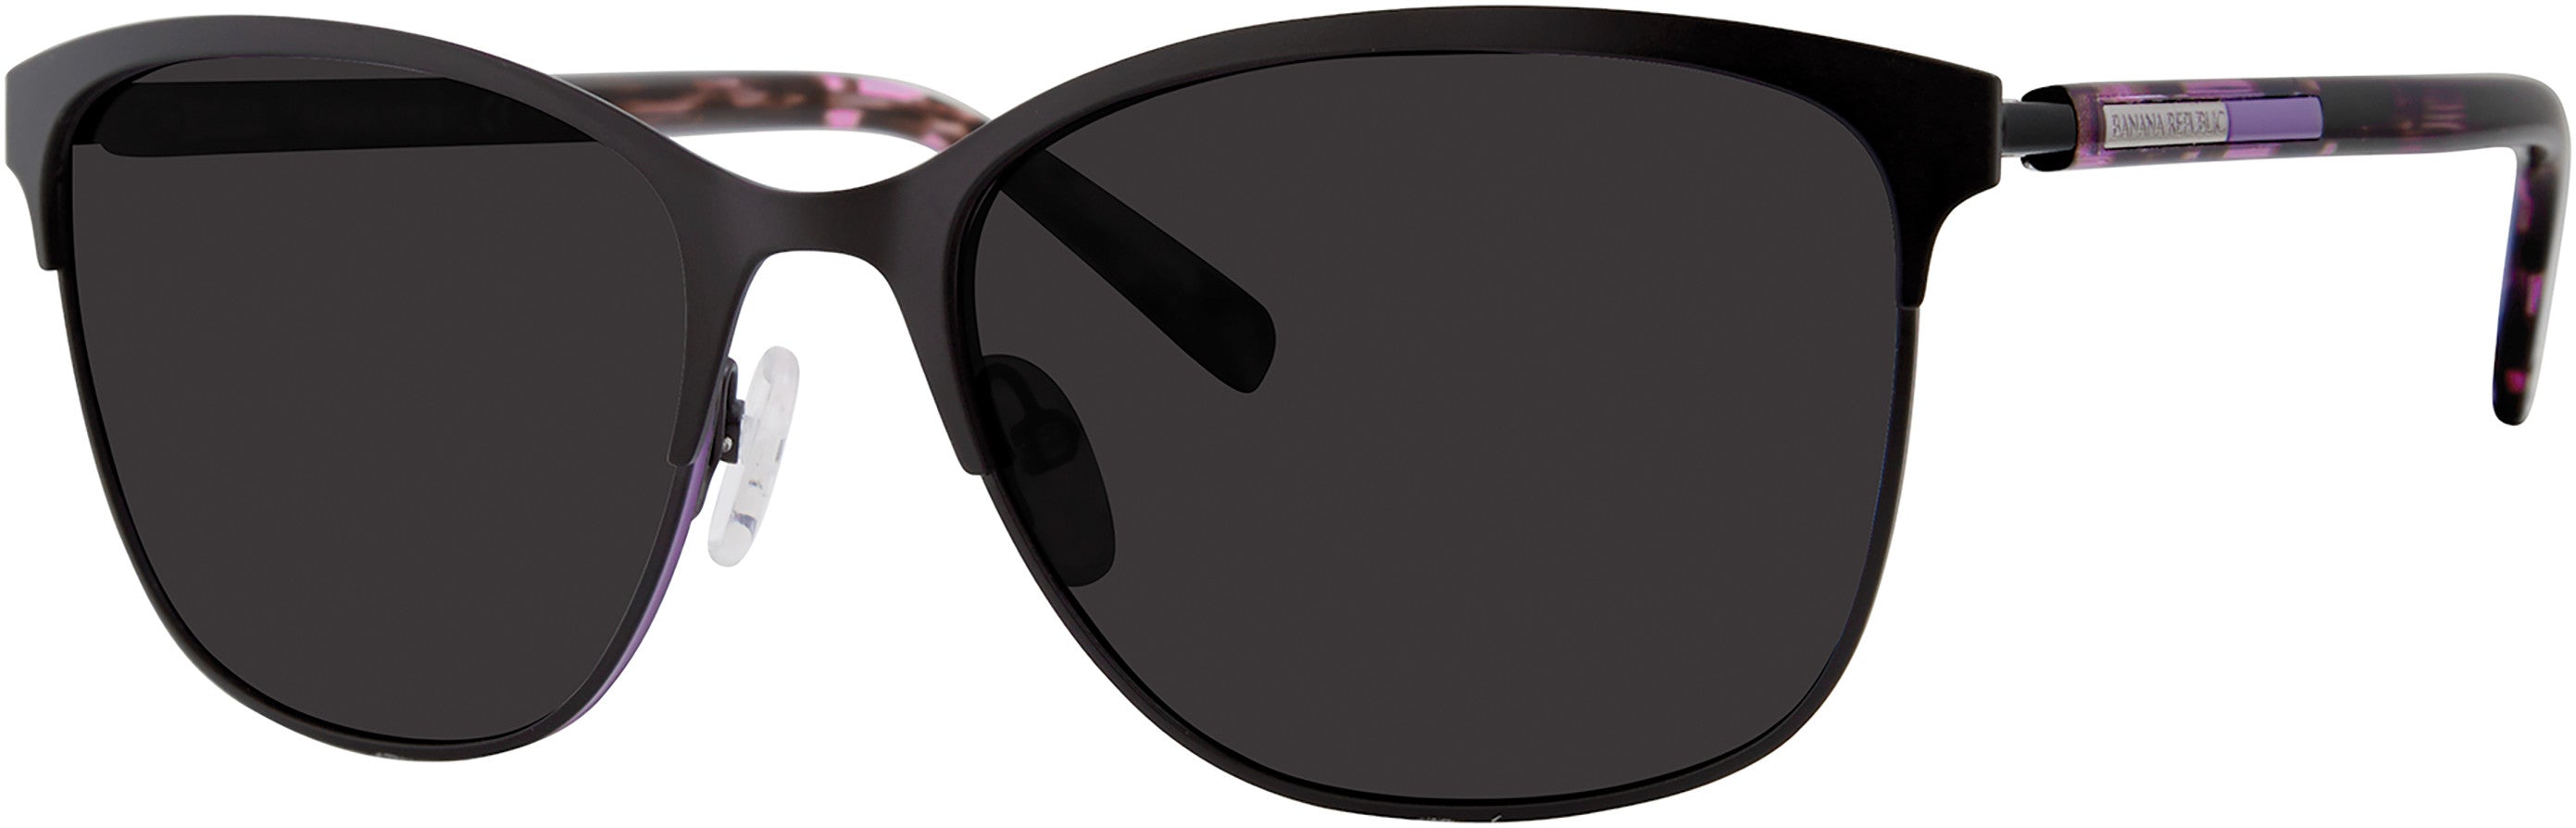 Banana Republic Klara/S Oval Modified Sunglasses 0807-0807  Black (M9 Gray Pz)